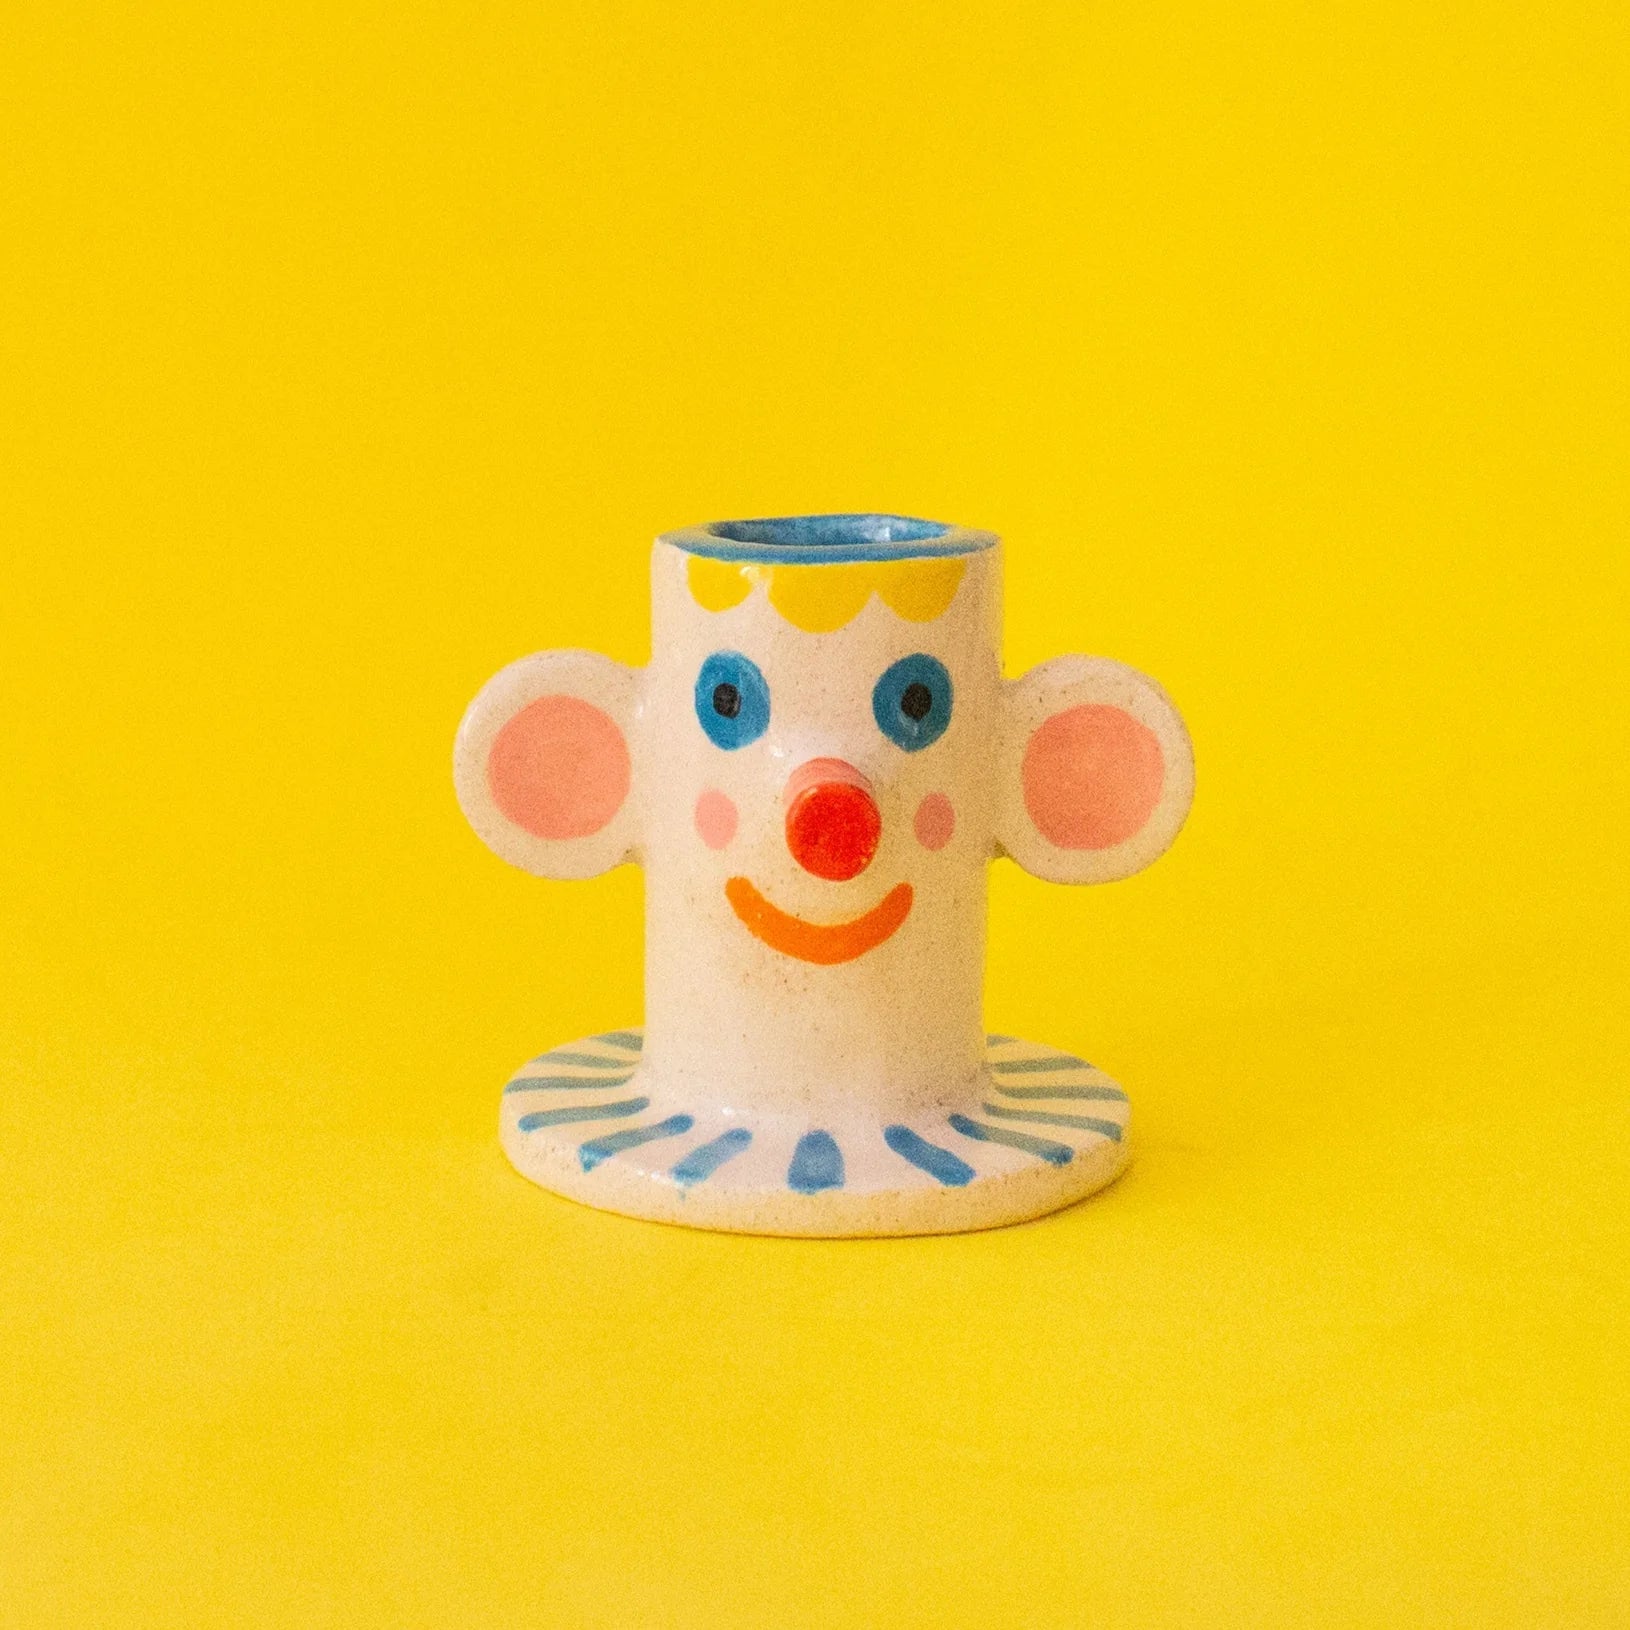 Happy Face Candle Holder / Ceramic Candleholder